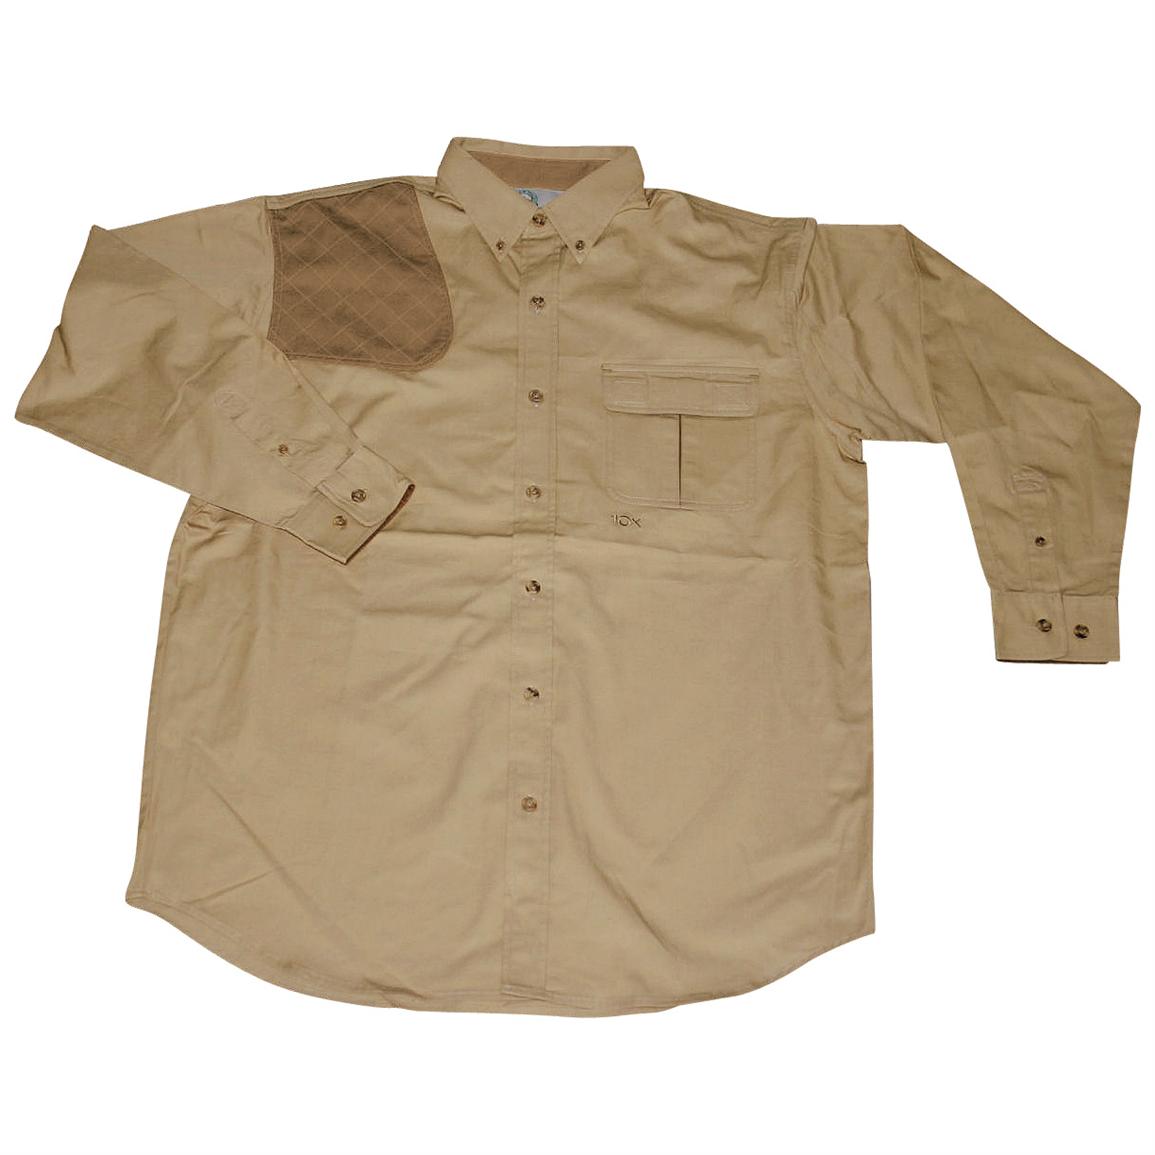 Walls® 10X® Tall Long Sleeve Cotton Shooter's Shirt - 126957, Camo ...